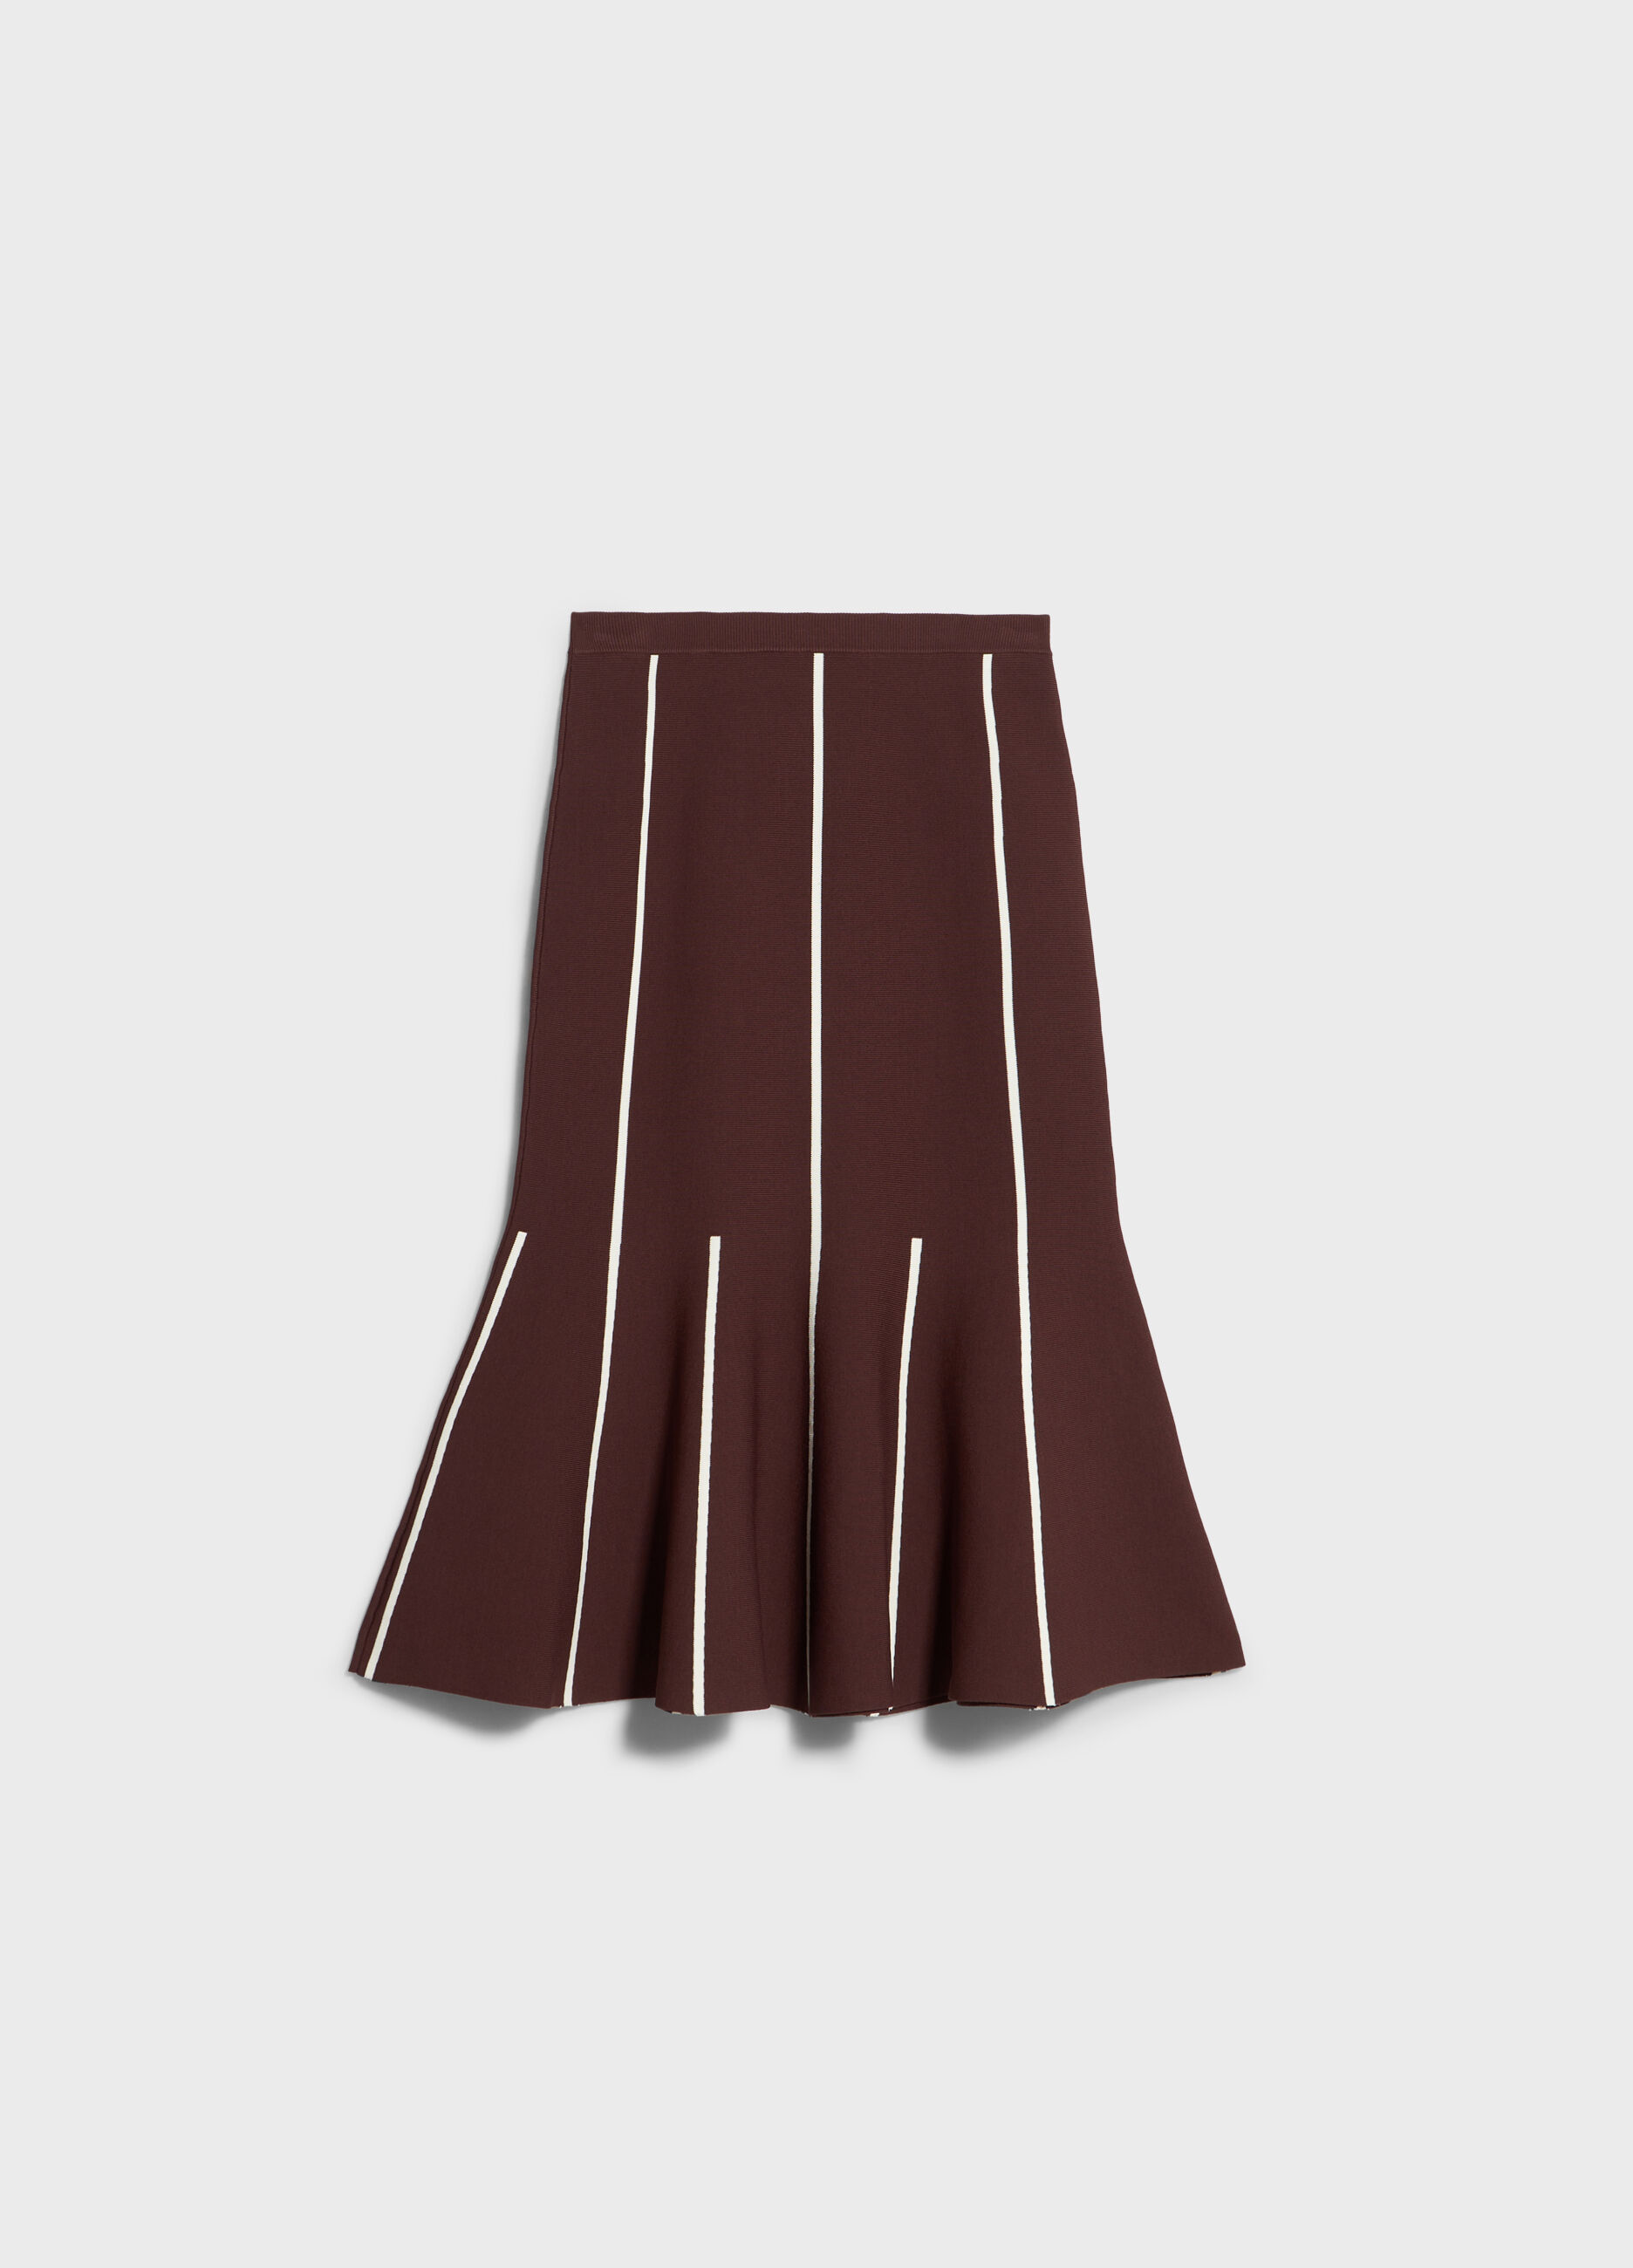 Pencil skirt with peplum hem